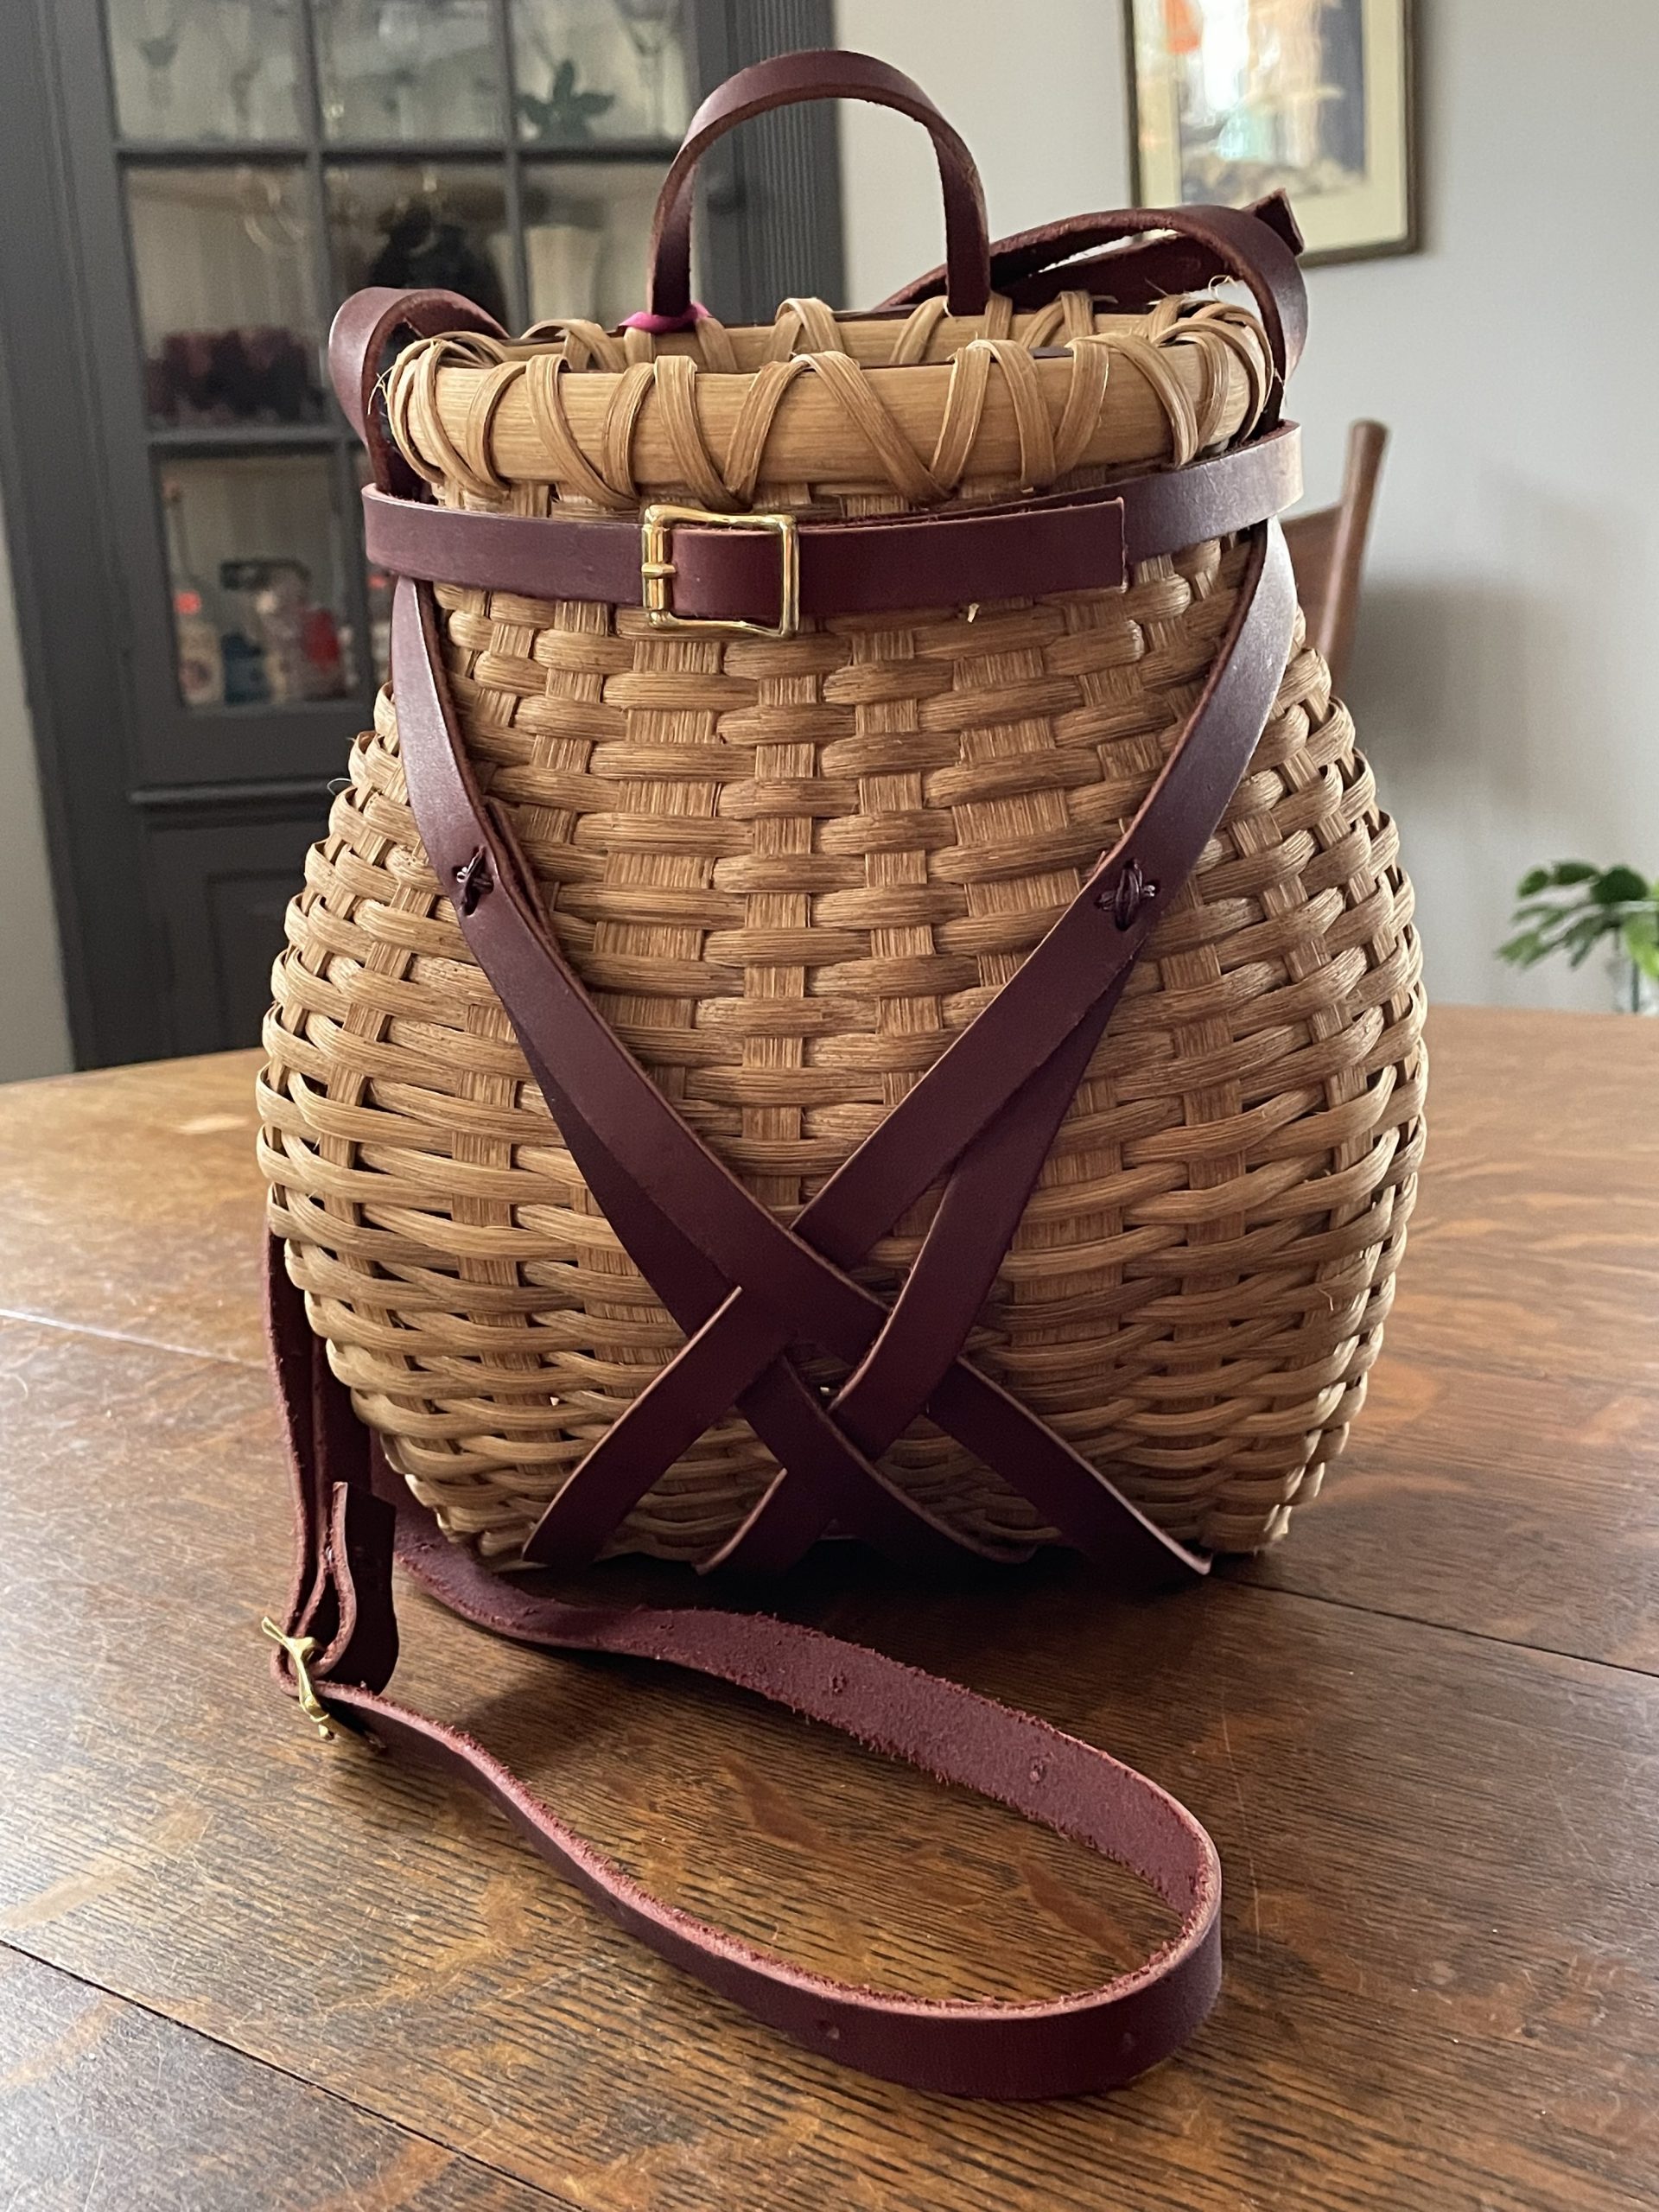 Basketry Archives - Adirondack Folk School